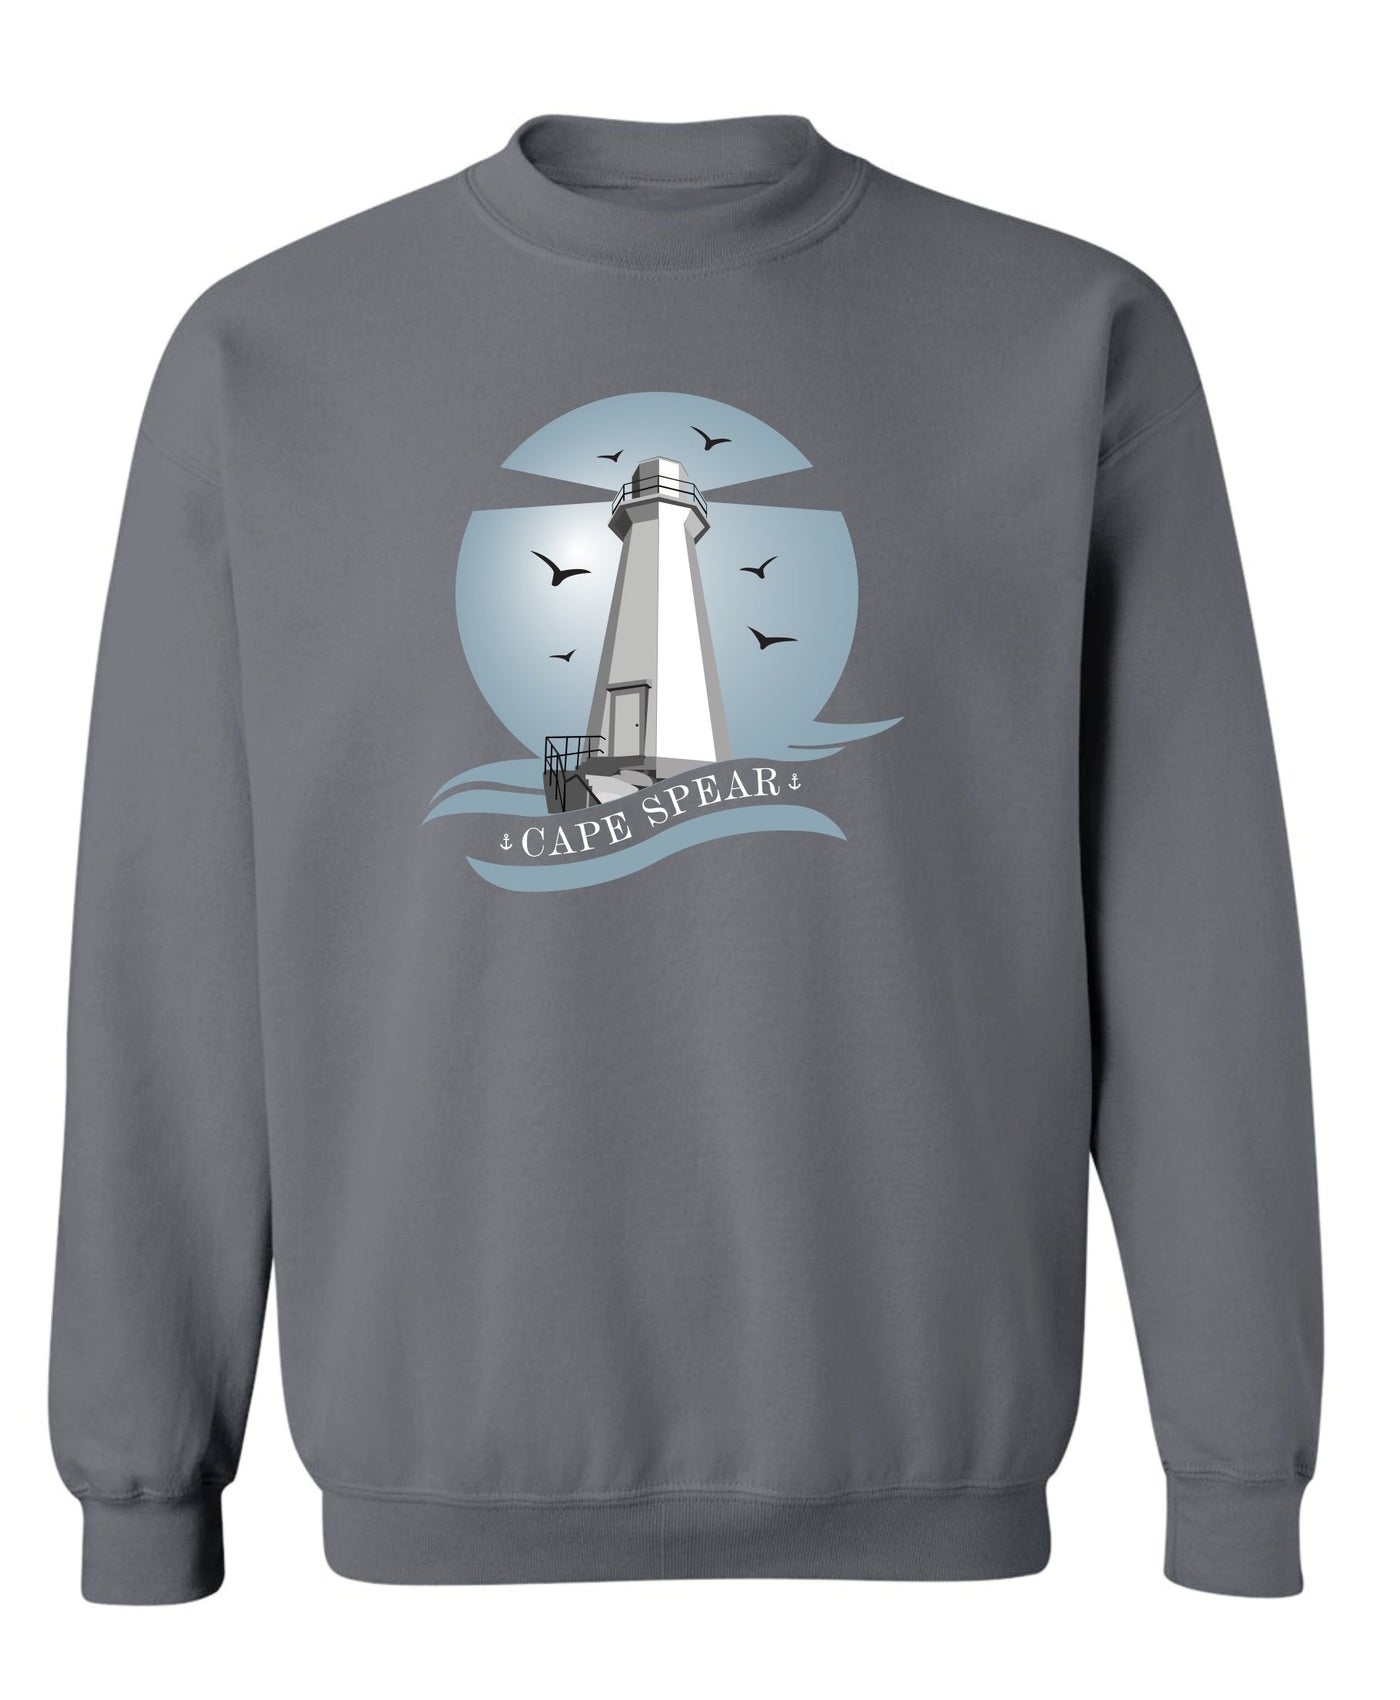 "Cape Spear" Unisex Crewneck Sweatshirt